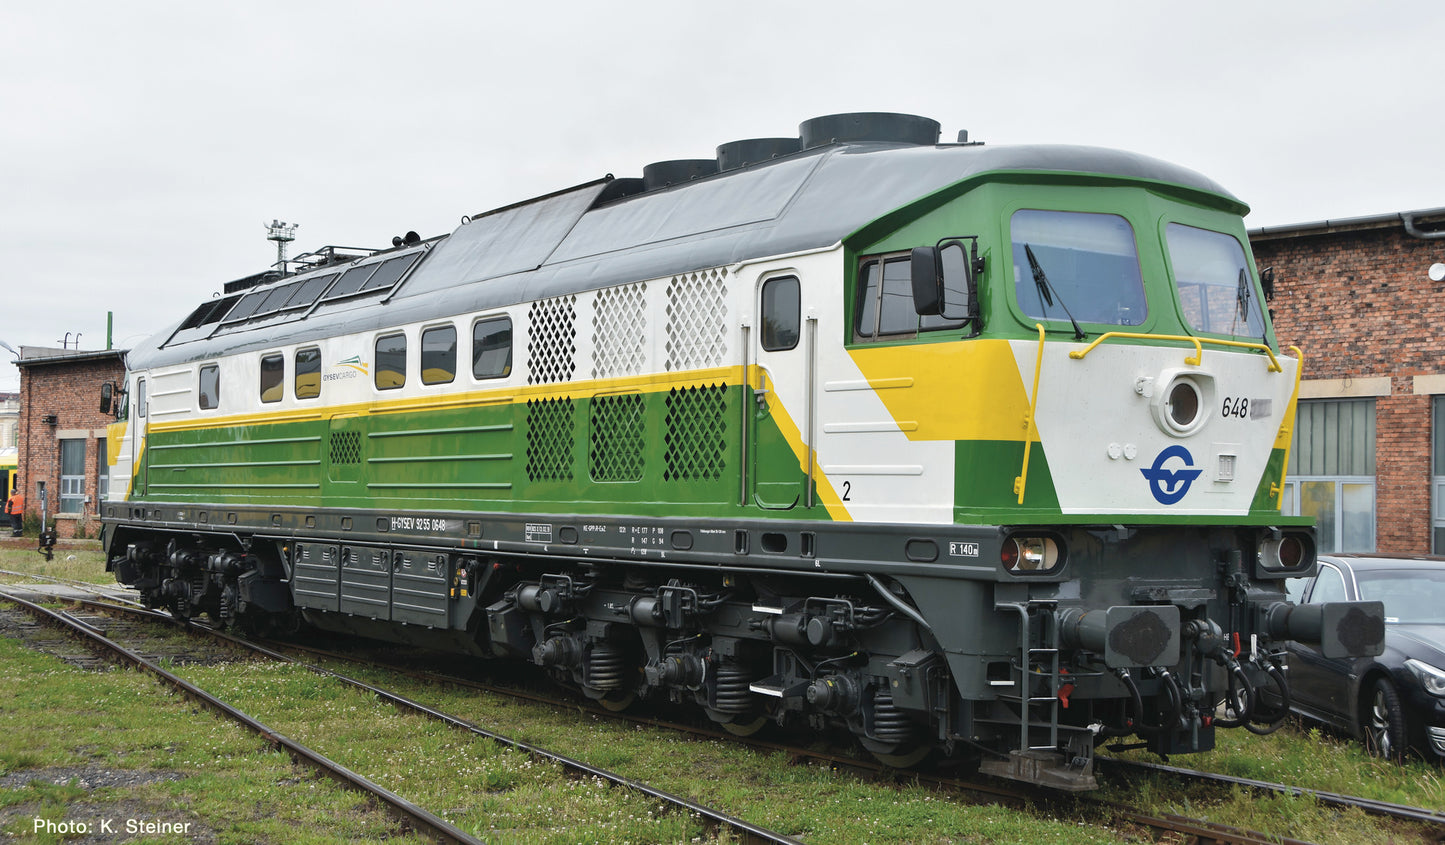 Roco HO ~AC  58465 ~AC Diesellokomotive Rh 648 2021 New Item